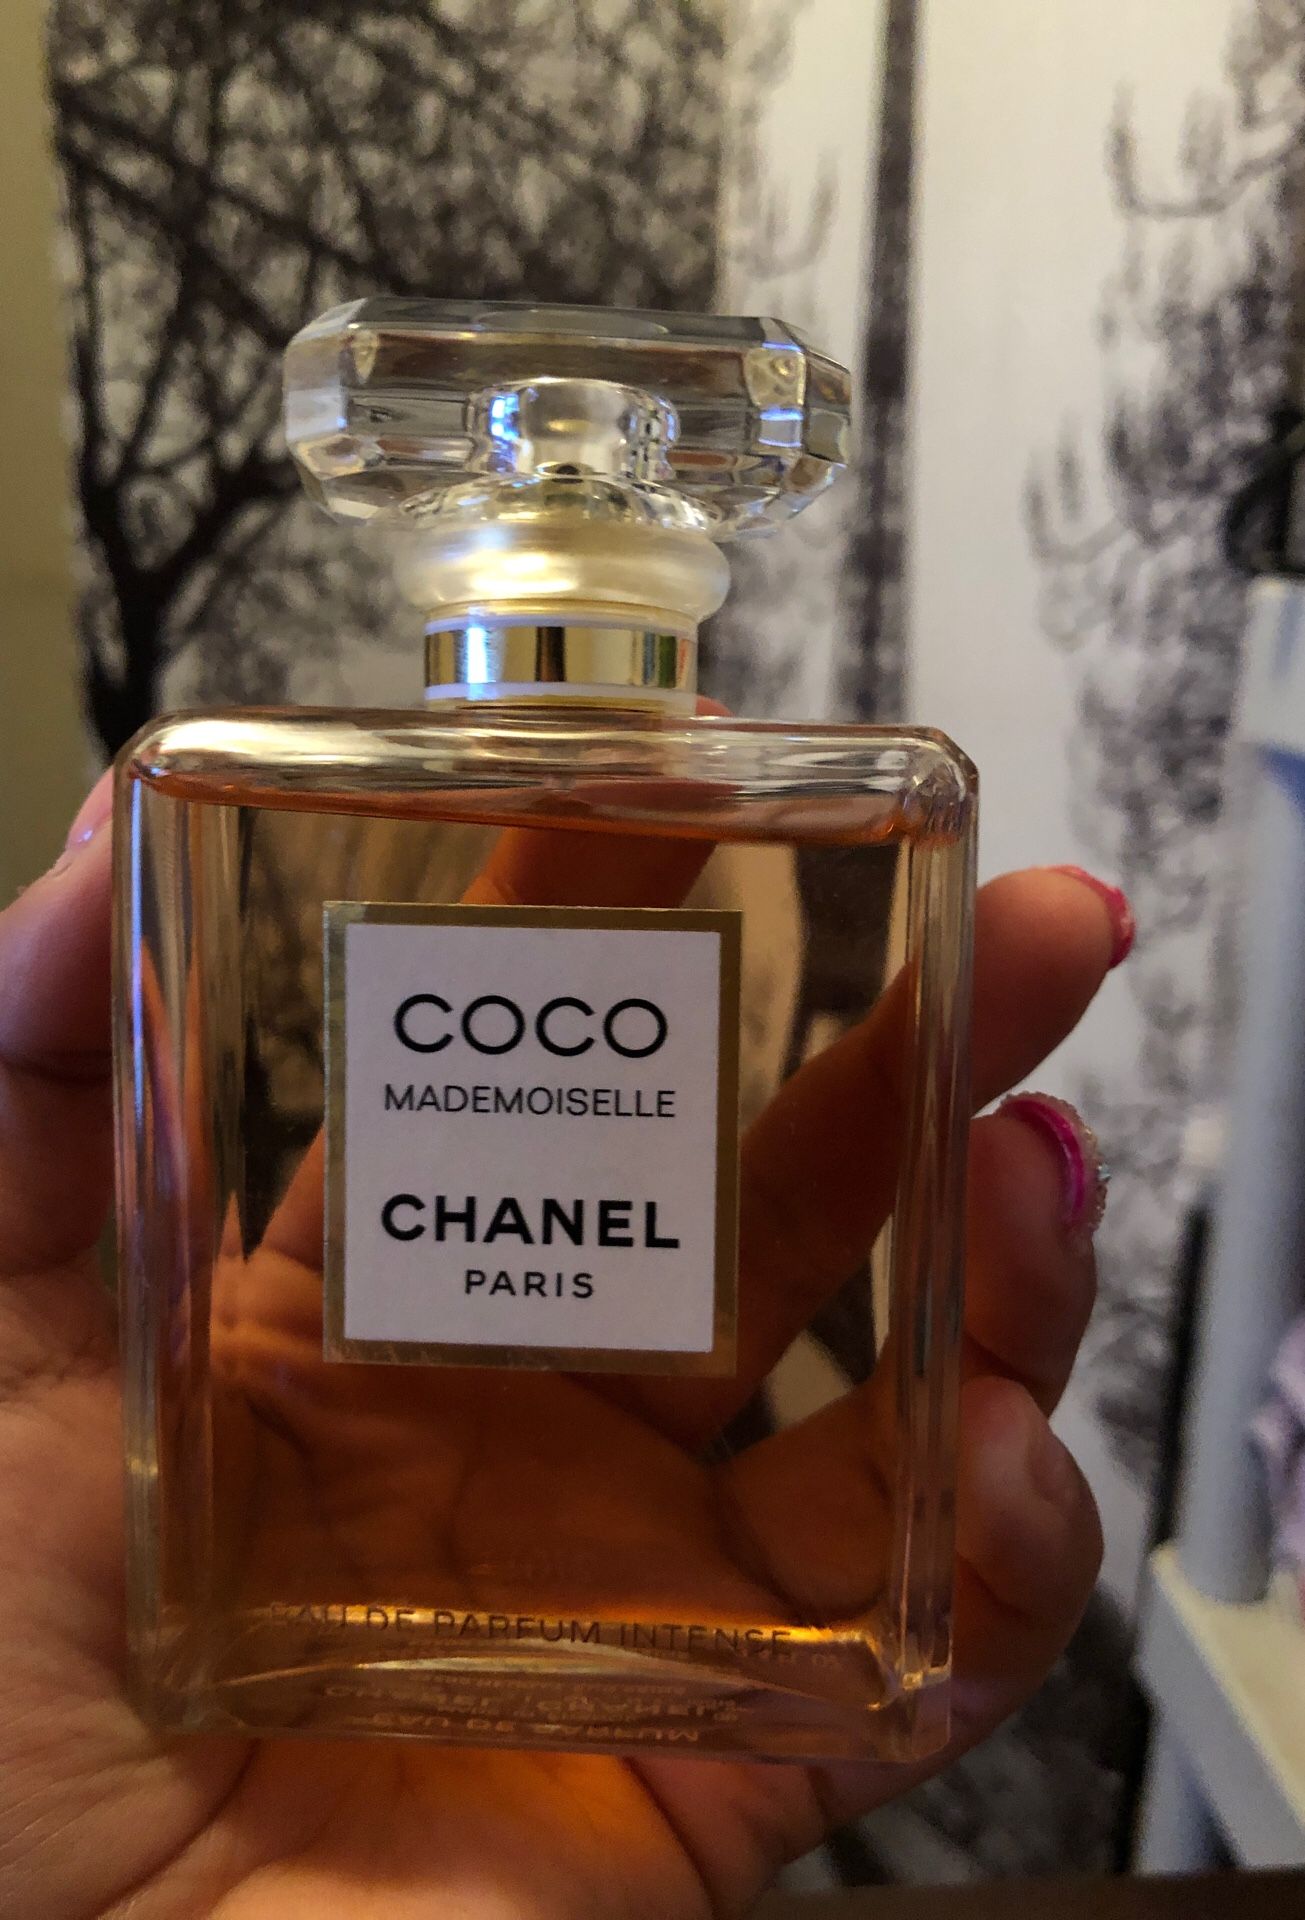 COCO Chanel perfume